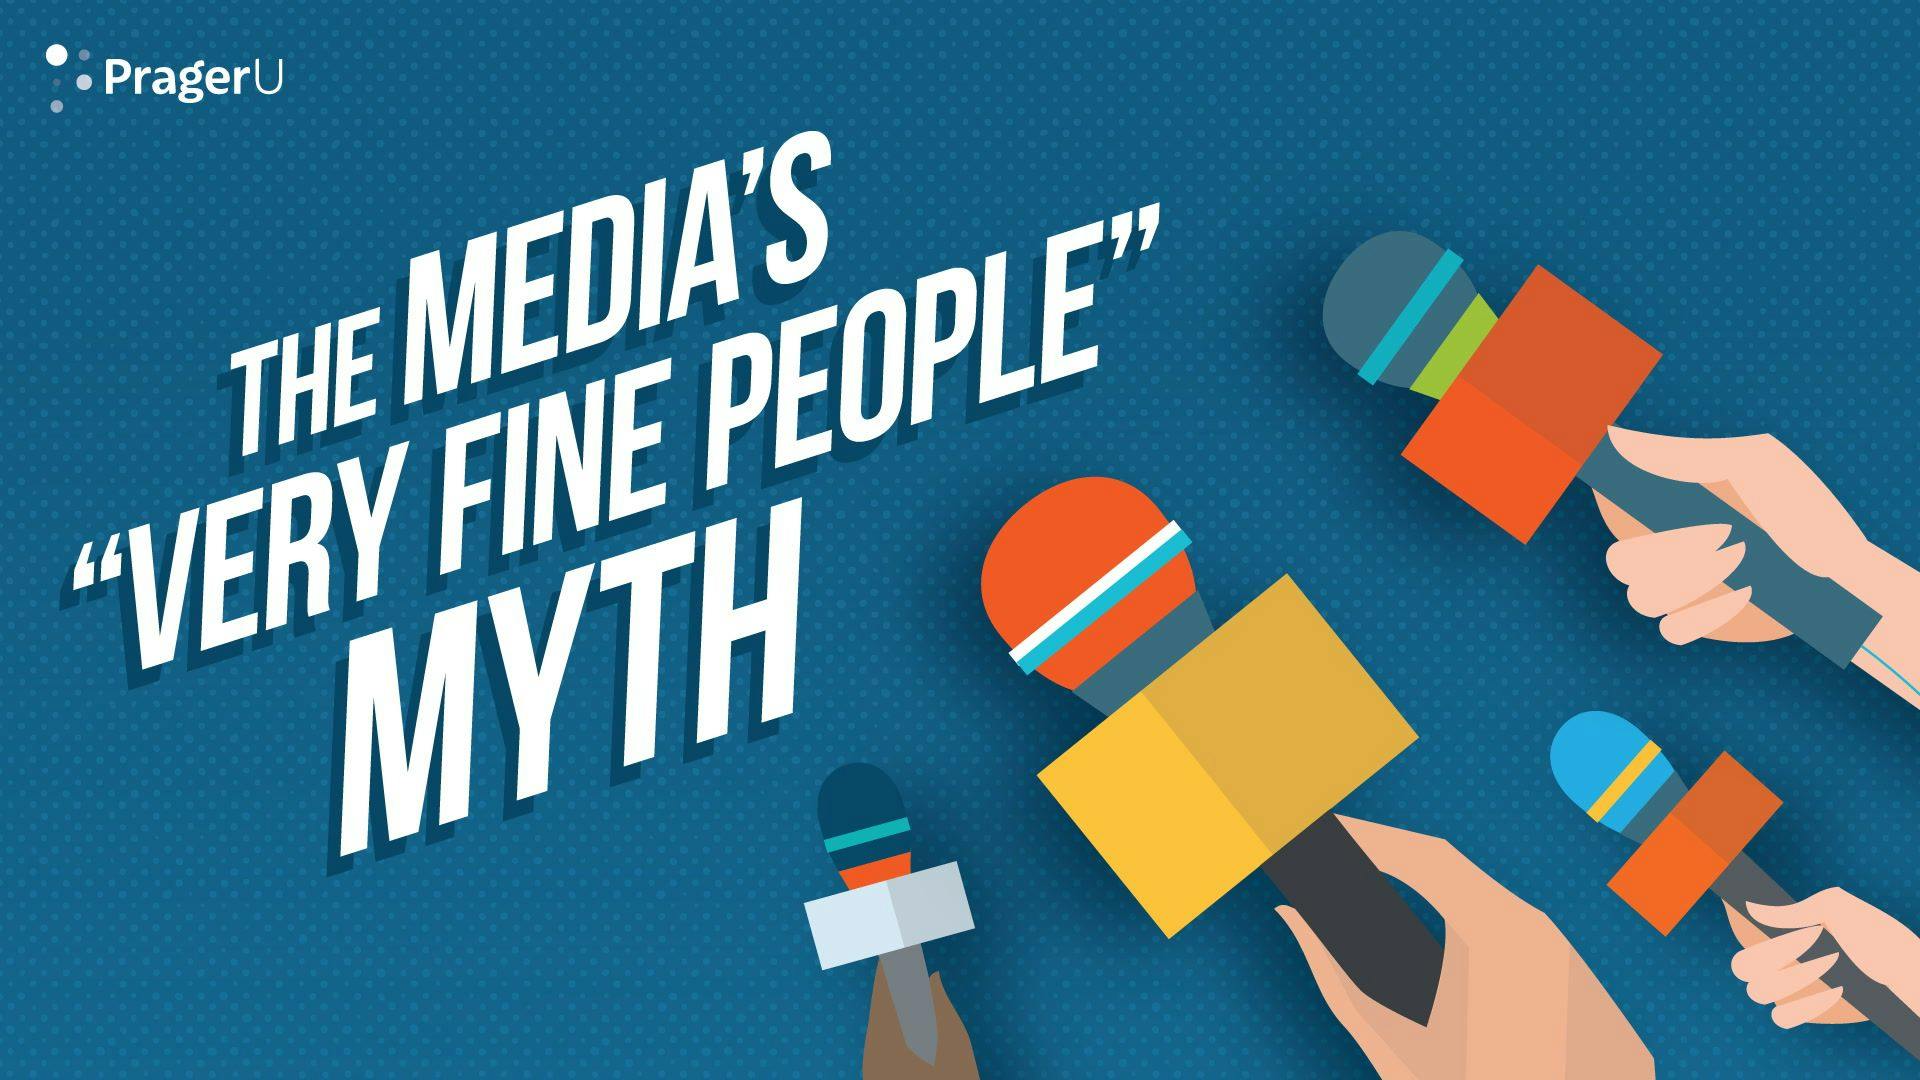 The Media's "Very Fine People" Myth